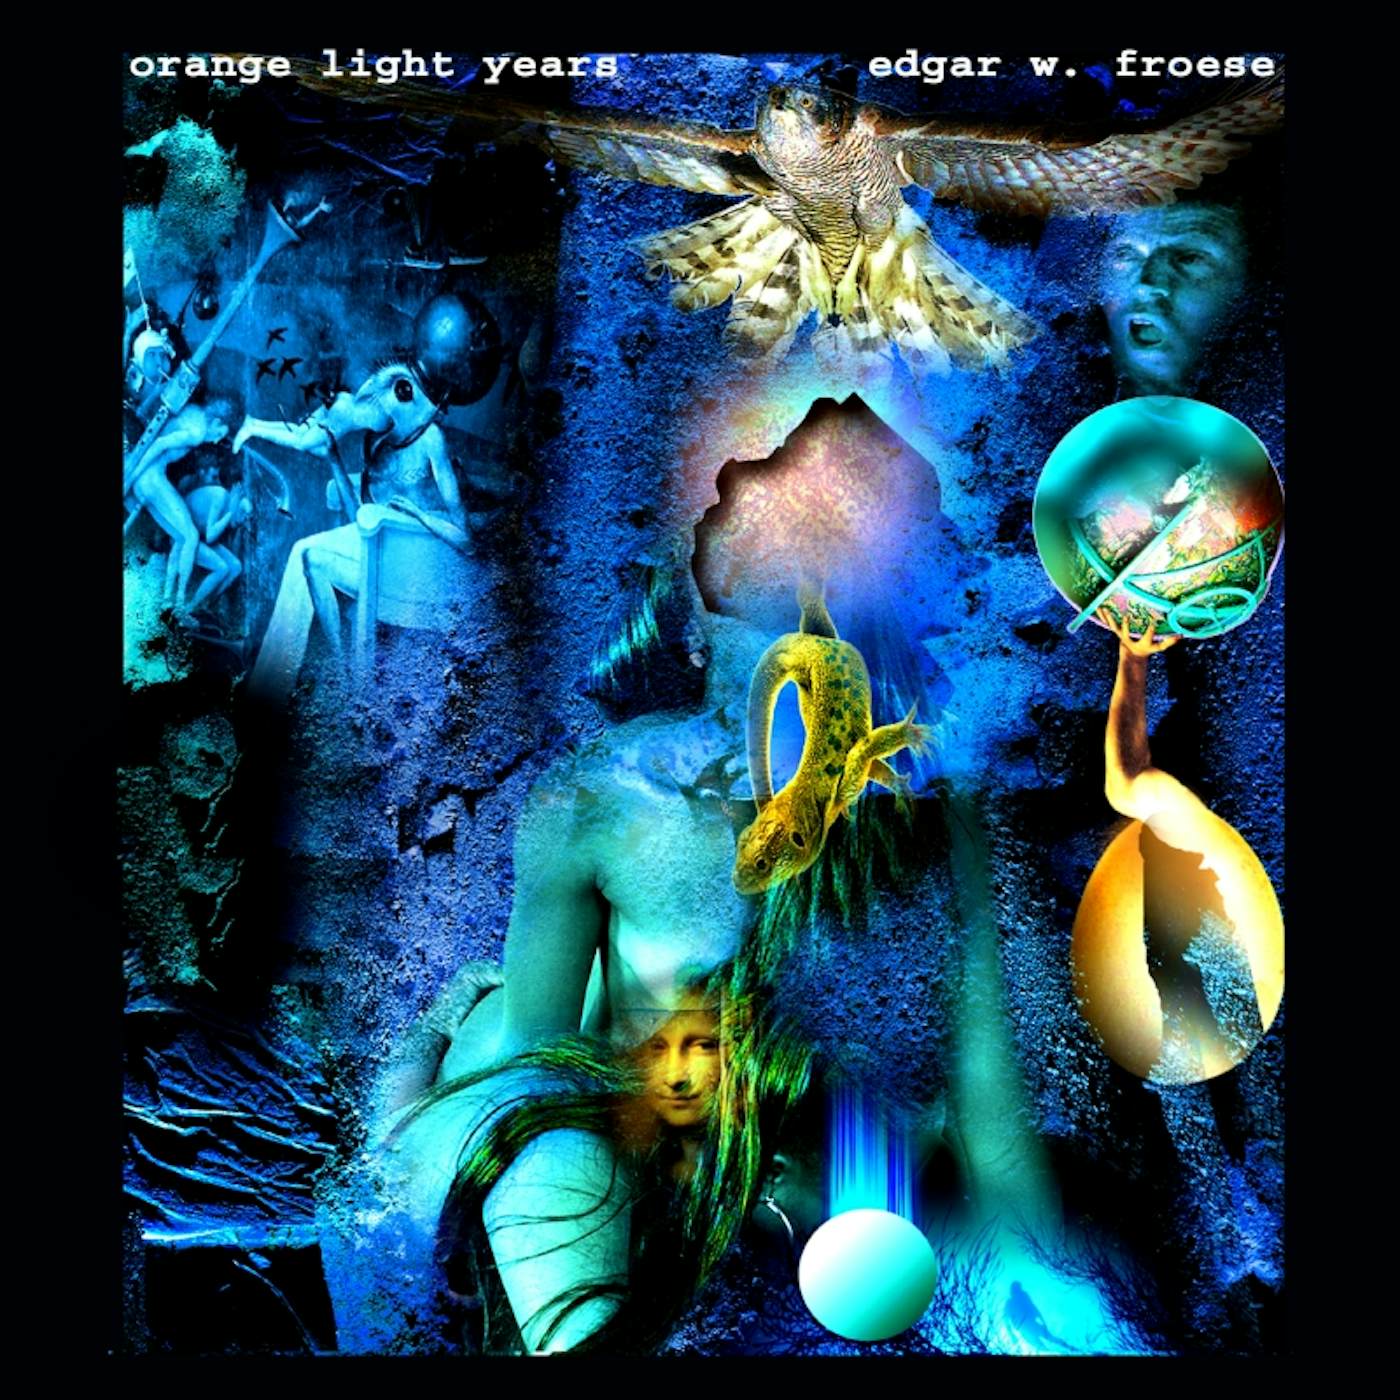 Edgar Froese ORANGE LIGHT YEARS CD